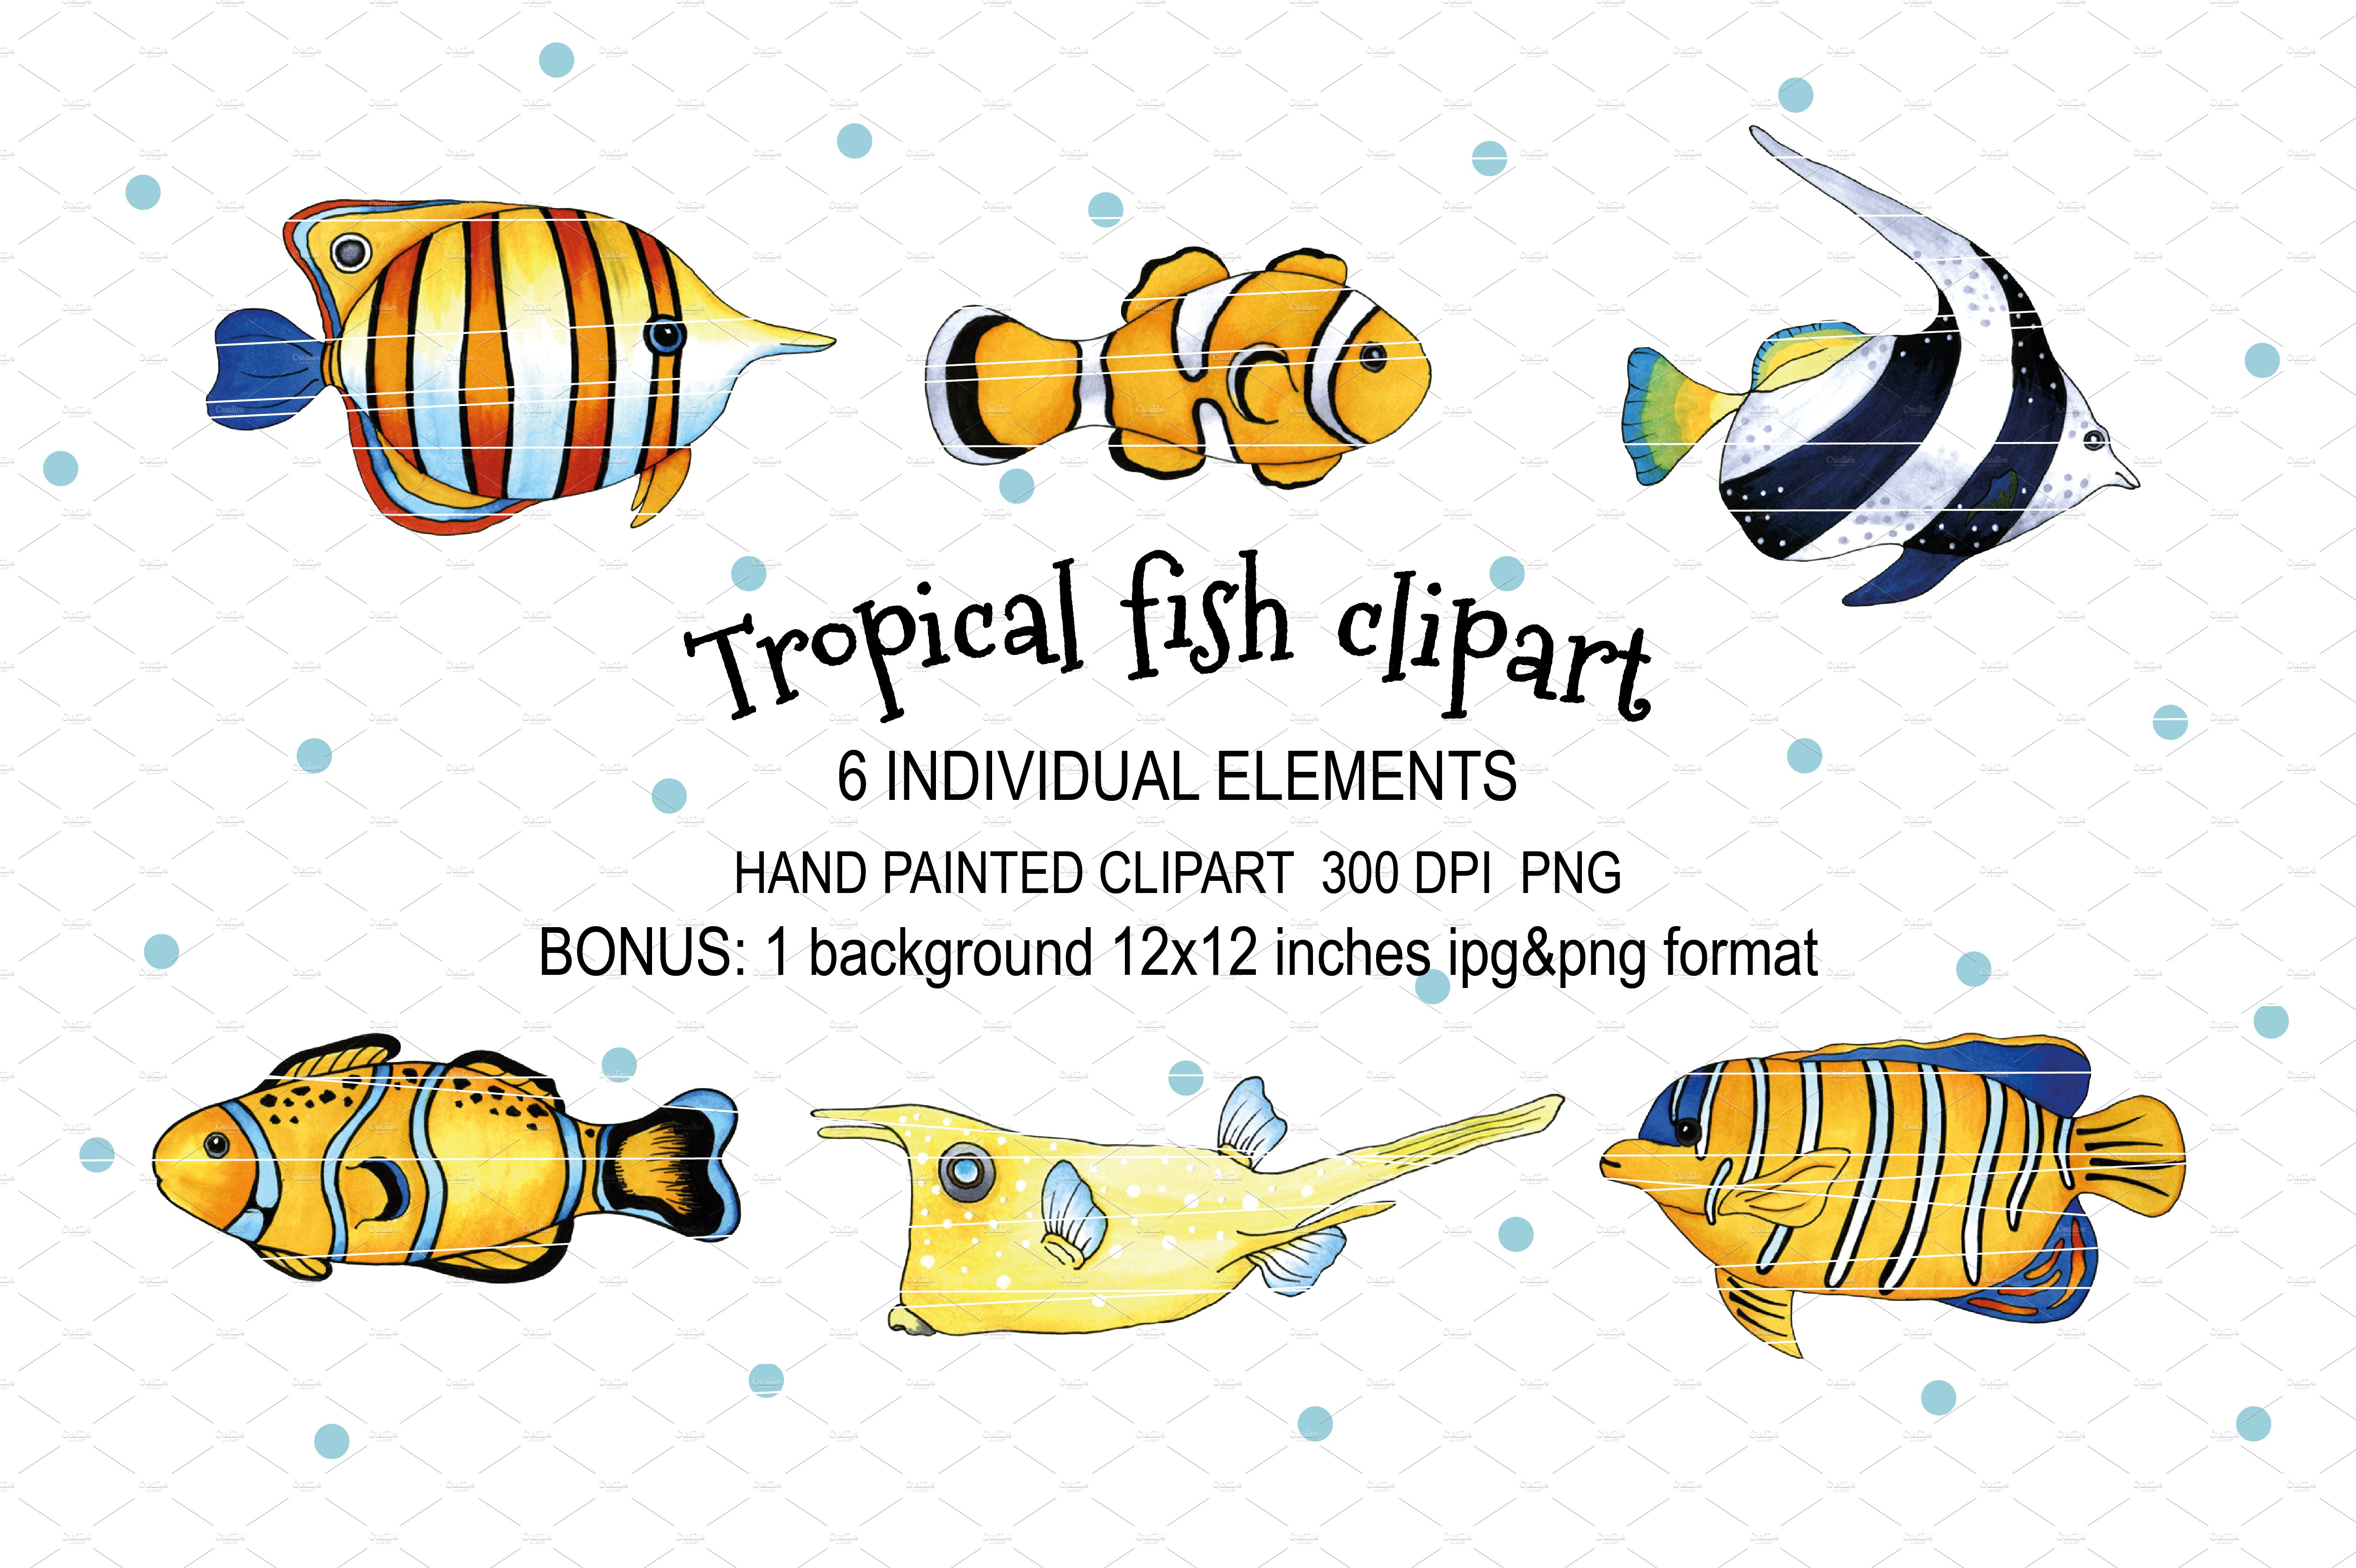 Tropical fish clipart.